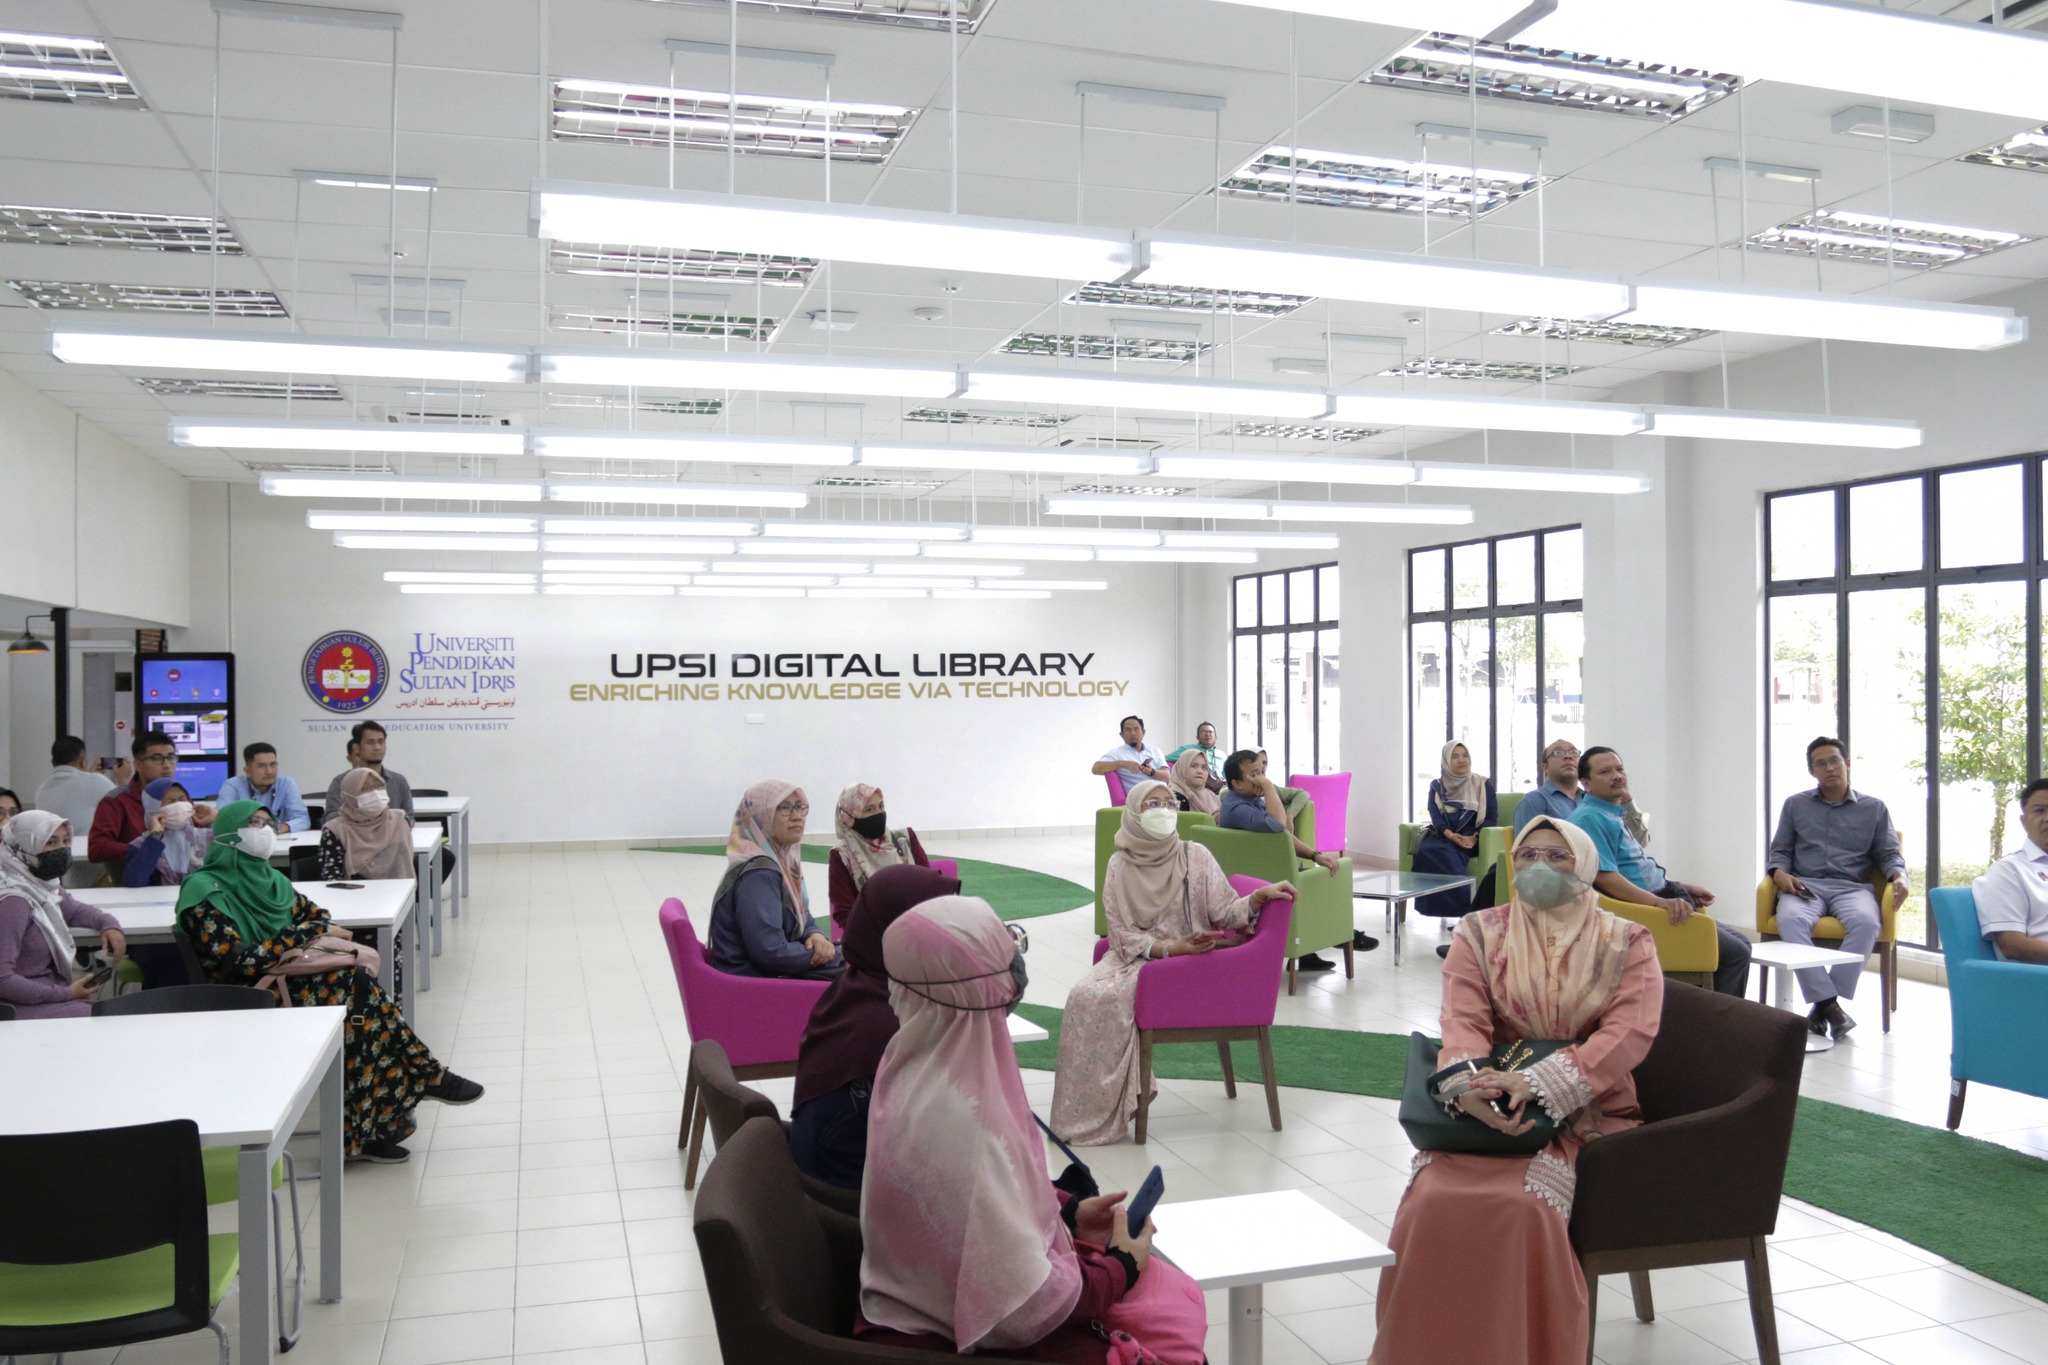 UMP Library Benchmarking Visit to the Dar al-Hikmah International Islamic University of Malaysia Library, Syed Muhammad Naquib al-Attas Library, Tuanku Bainun Library and UPSI Digital Library